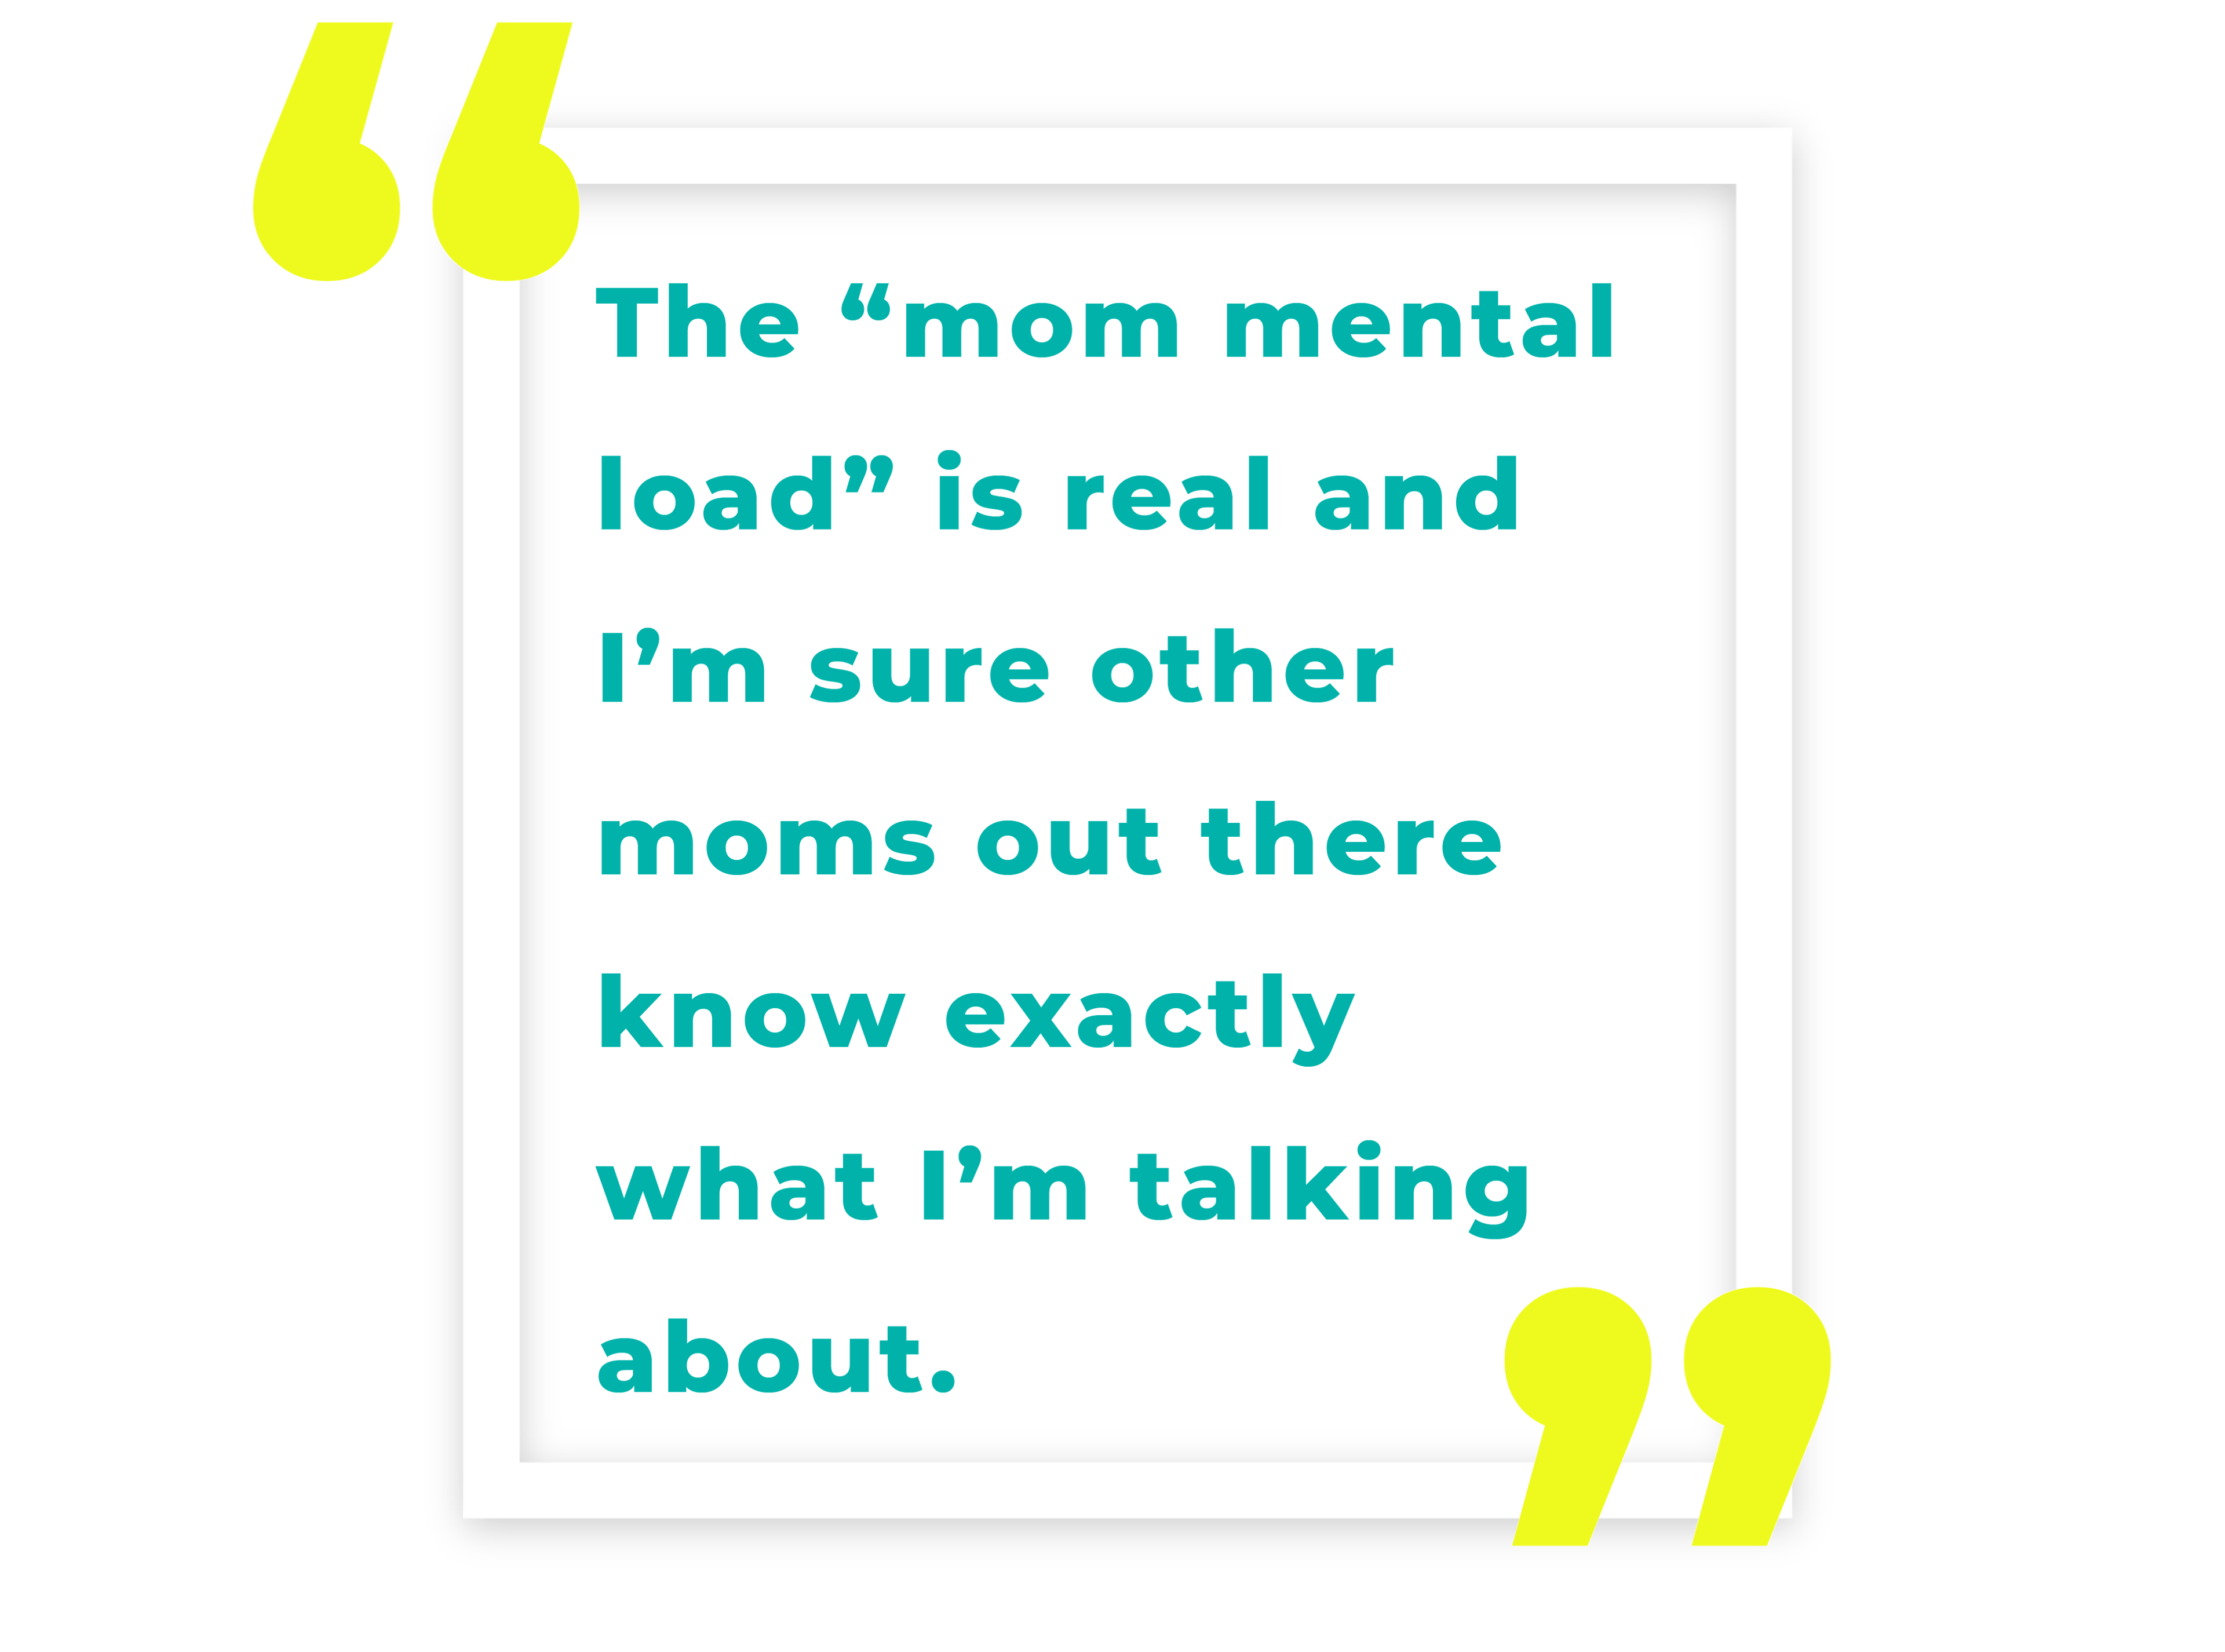 Bettina: the mom mental load